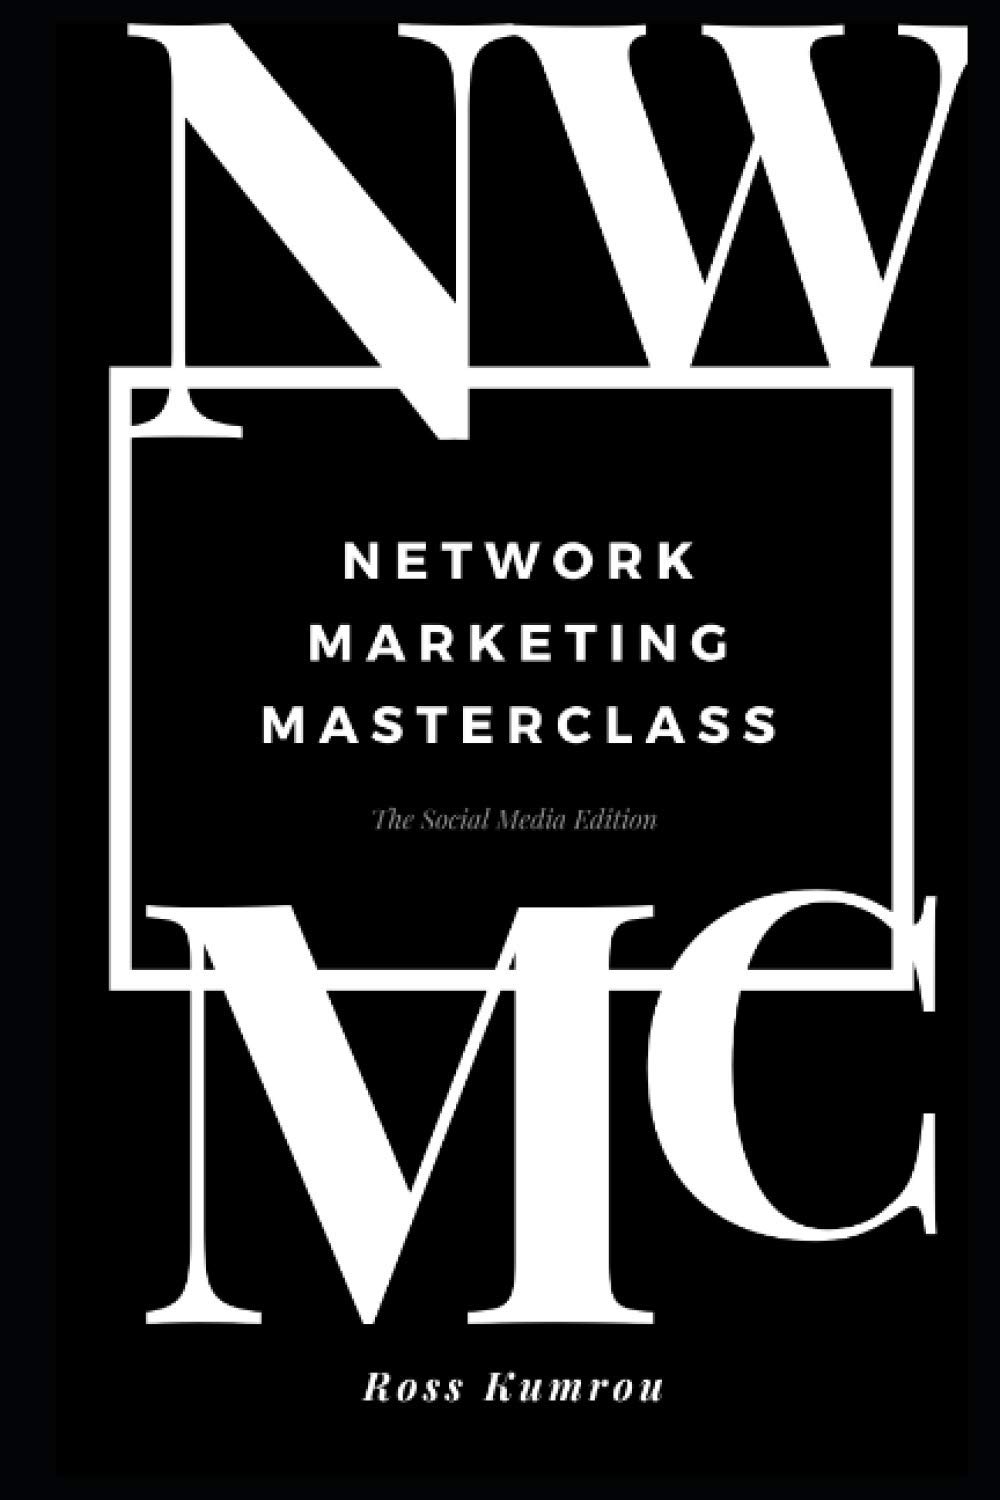 NETWORK MARKETING MASTERCLASS: The Social Media Edition